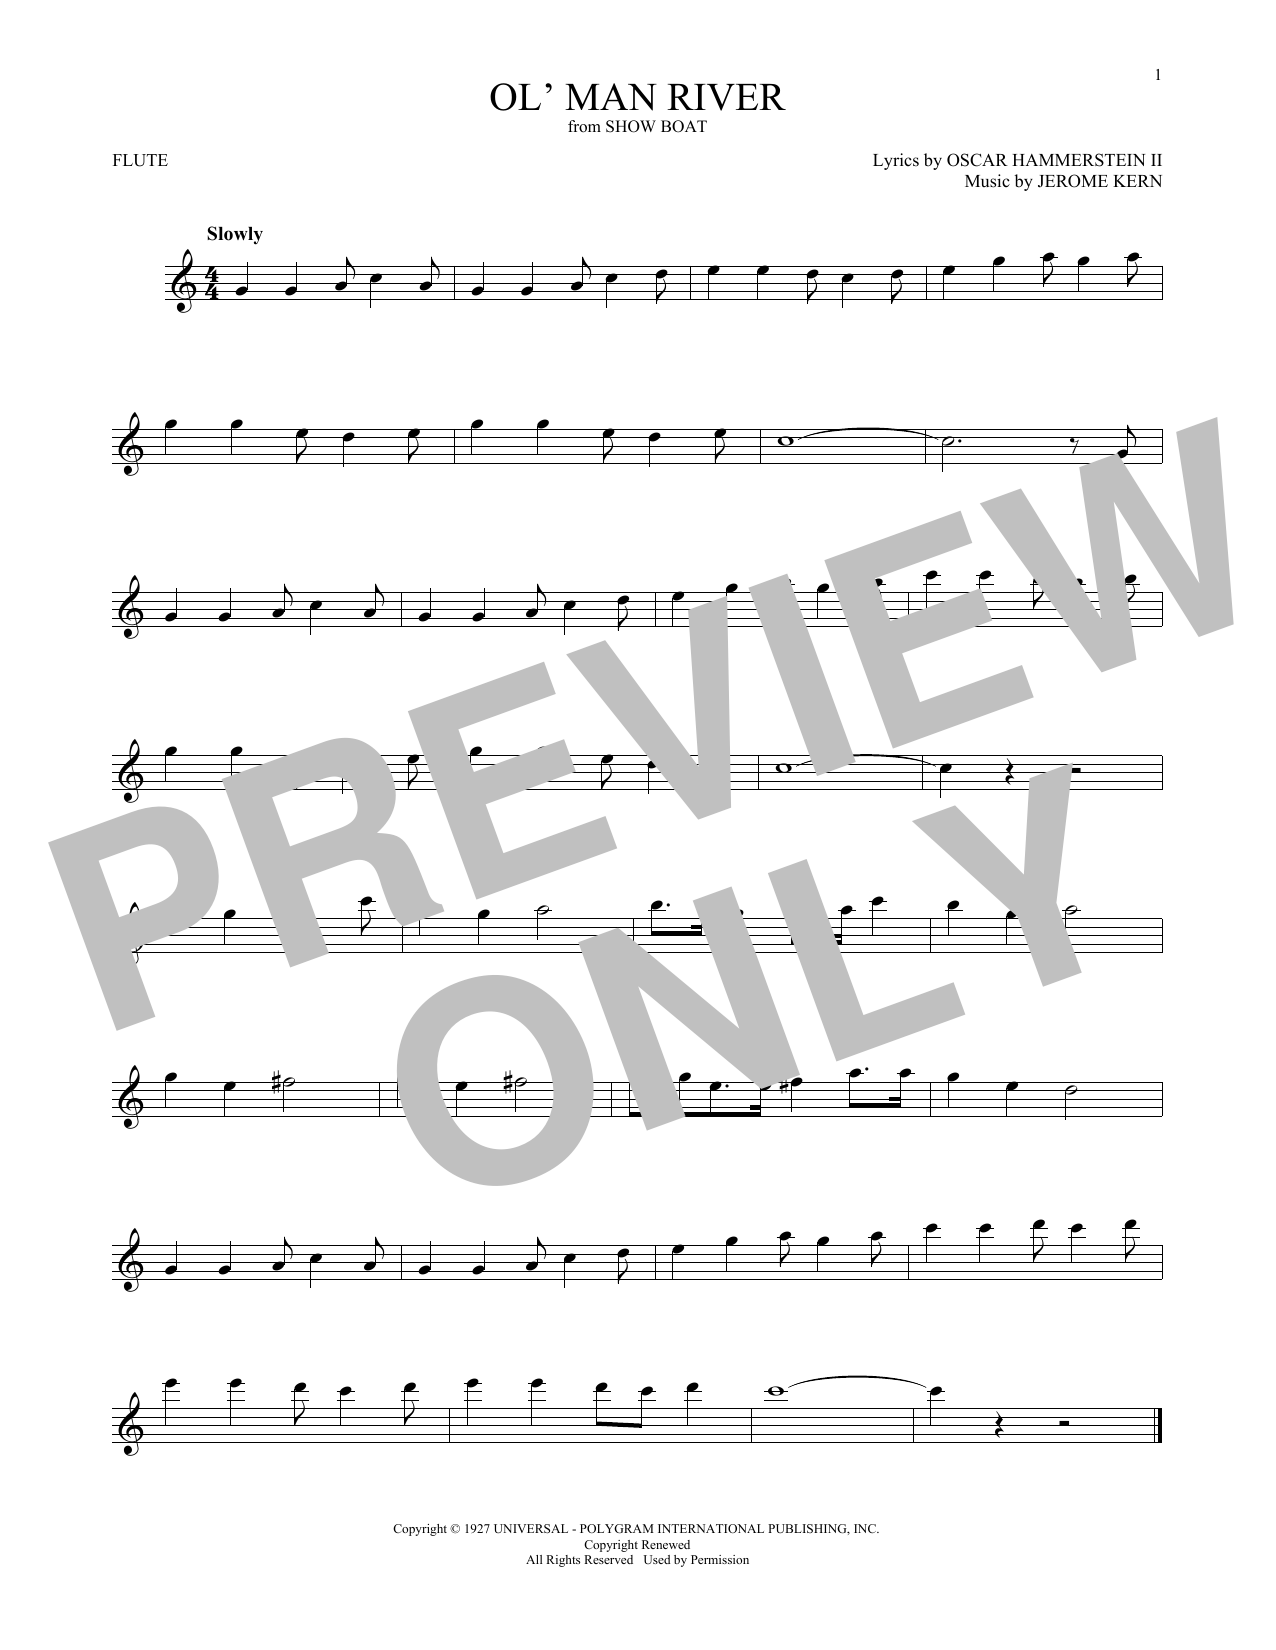 Oscar Hammerstein II Ol' Man River Sheet Music Notes & Chords for Flute - Download or Print PDF